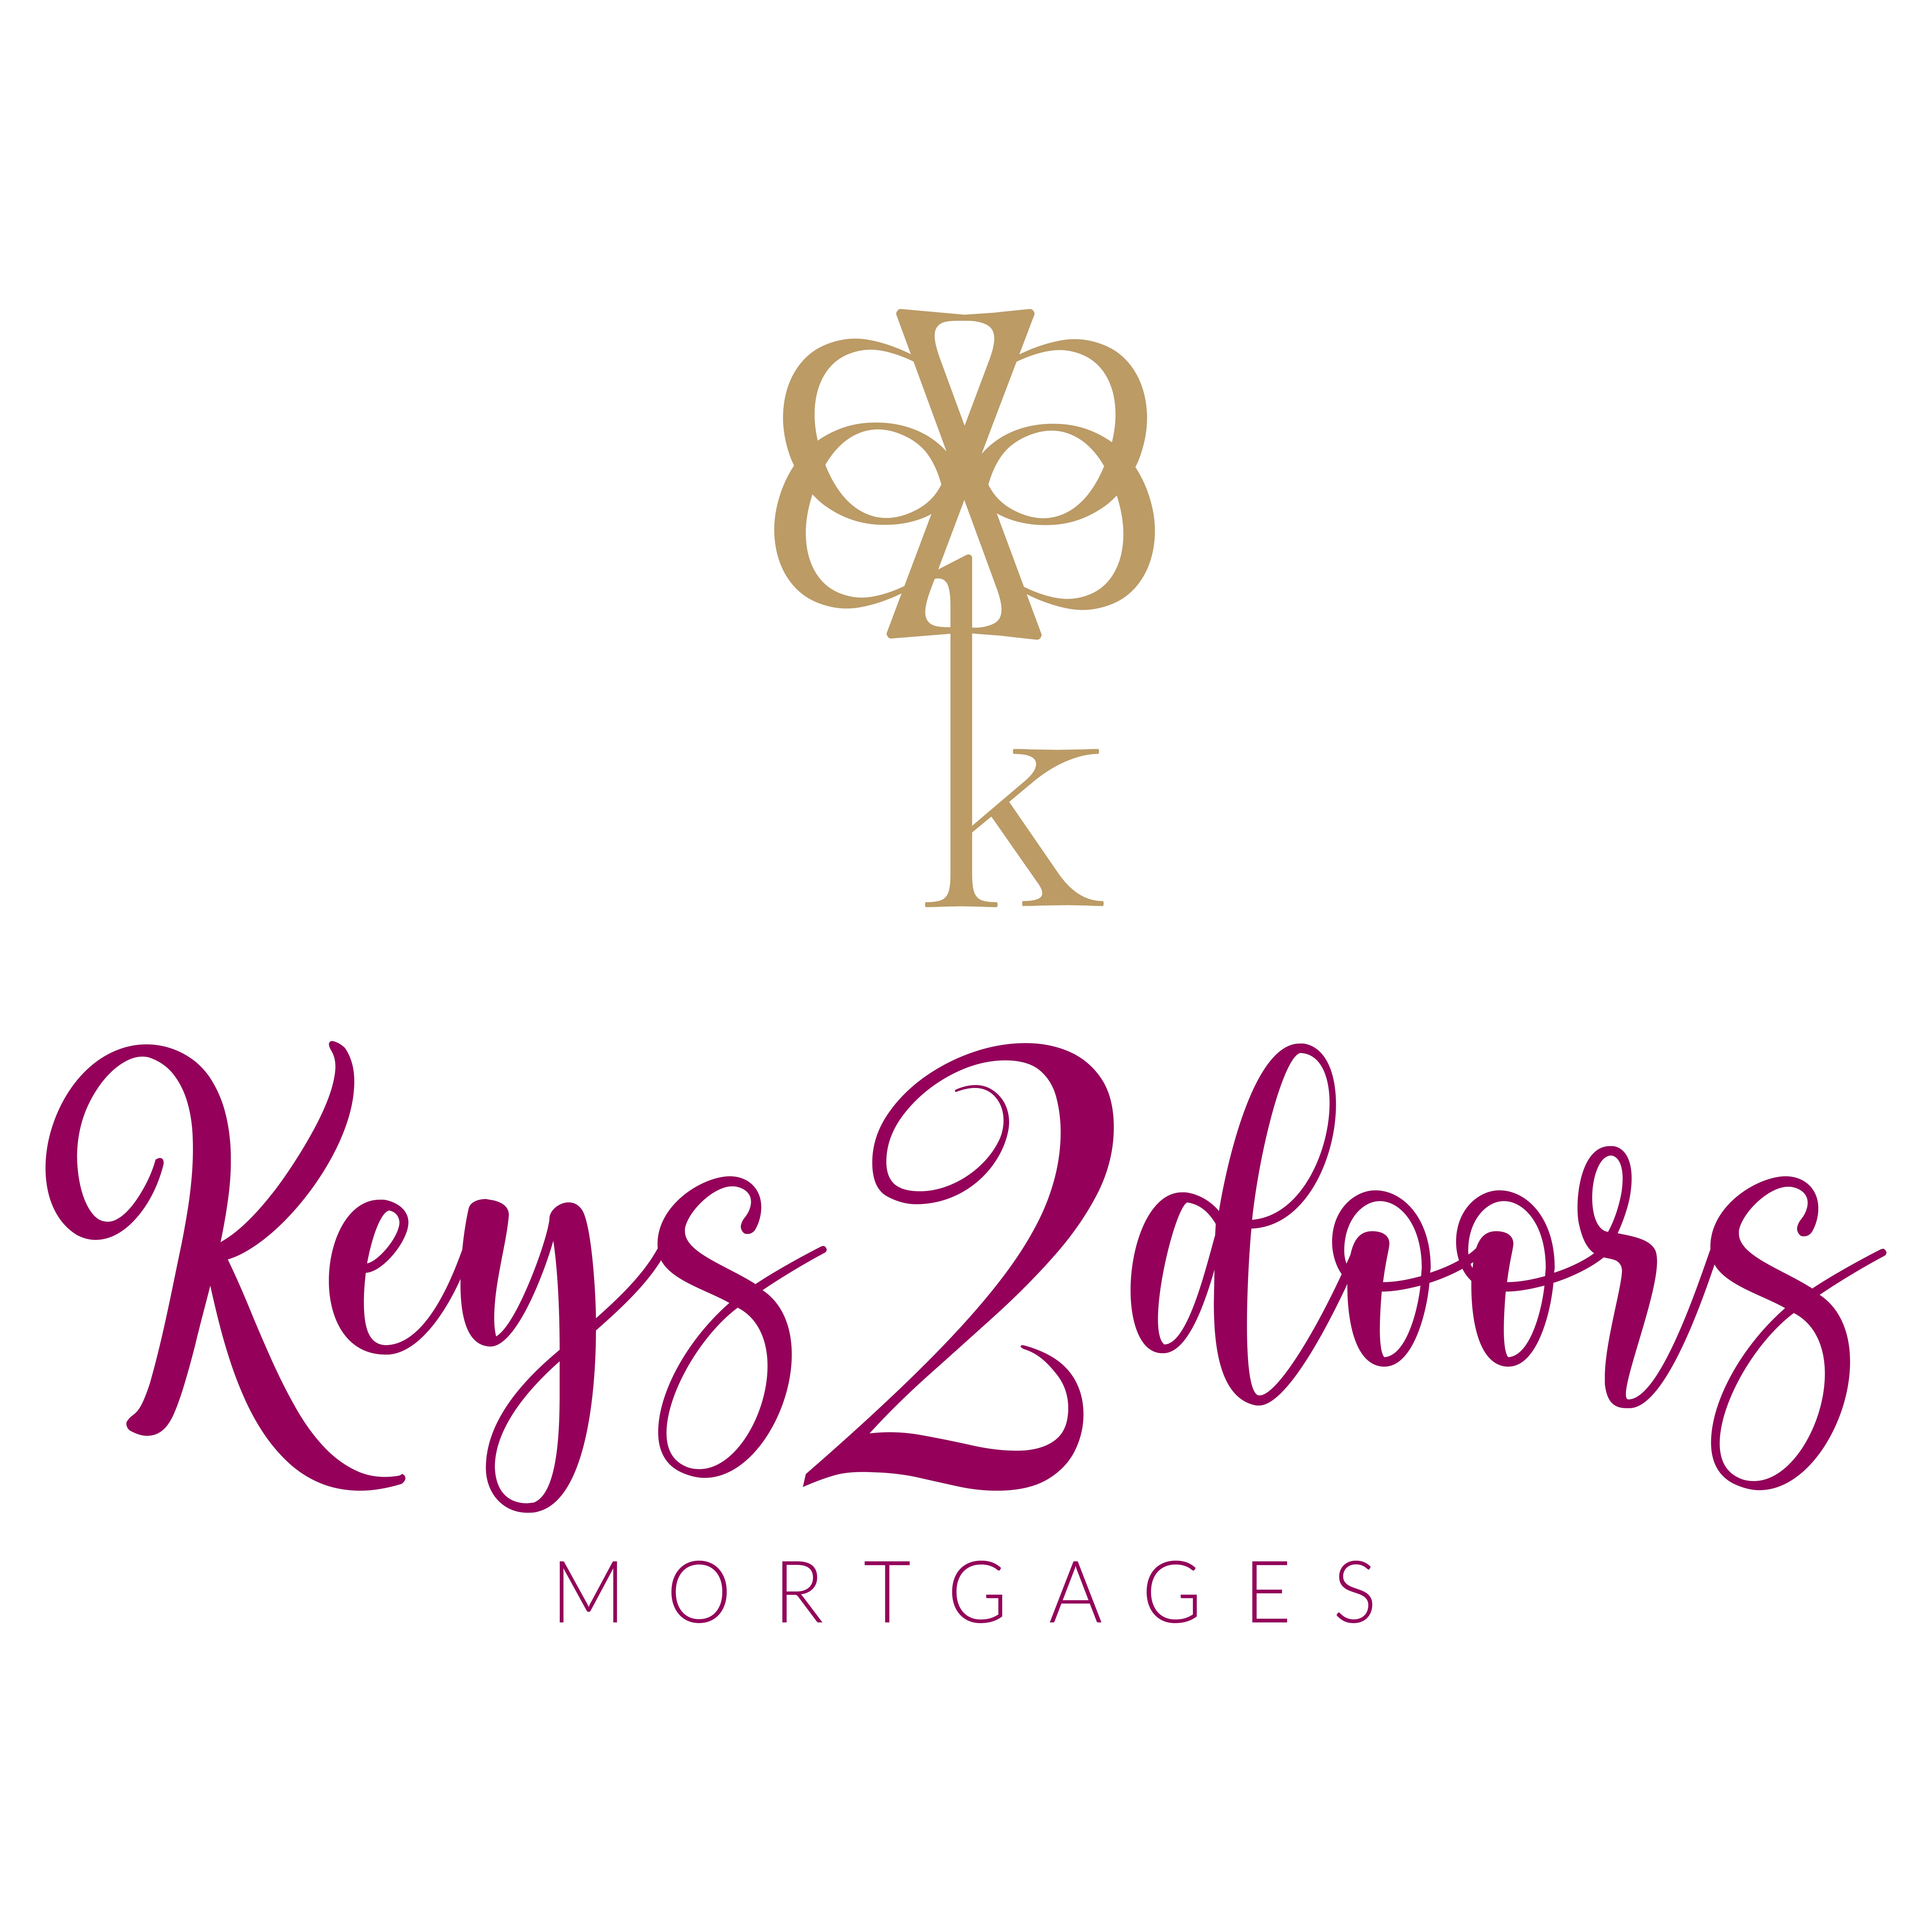 Keys 2 Doors Mortgages